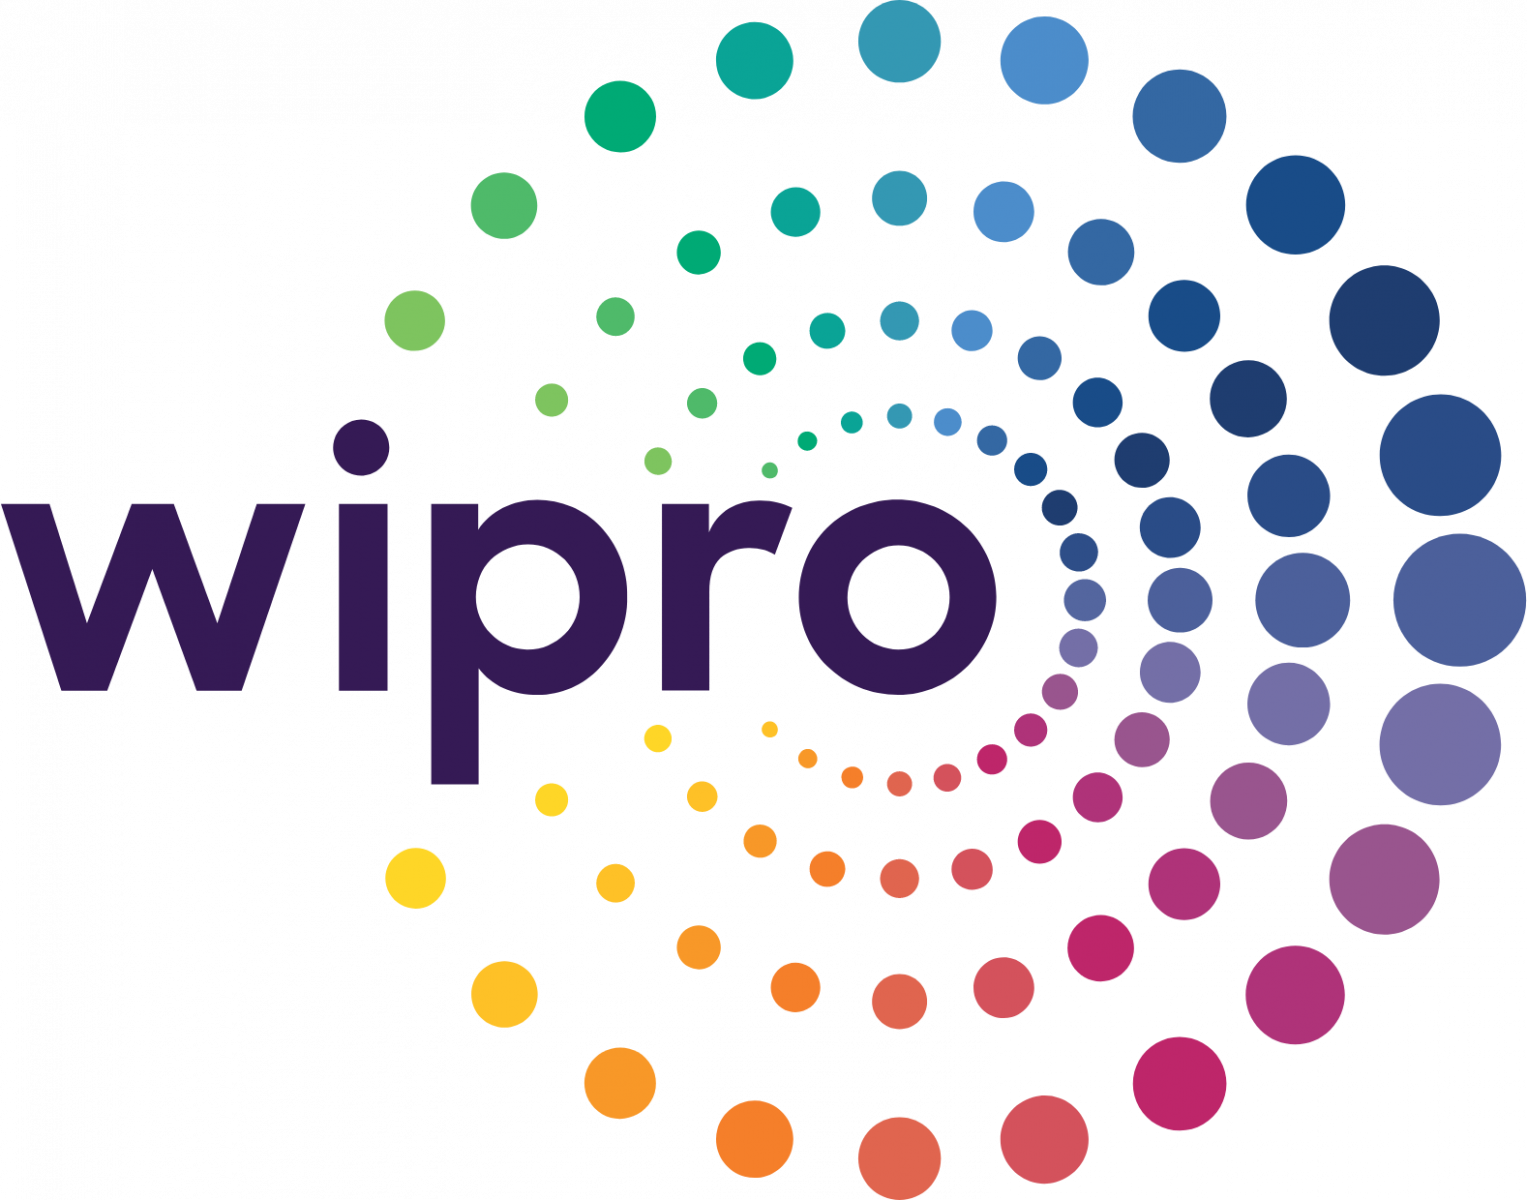 Wipro it companies in Navi Mumbai